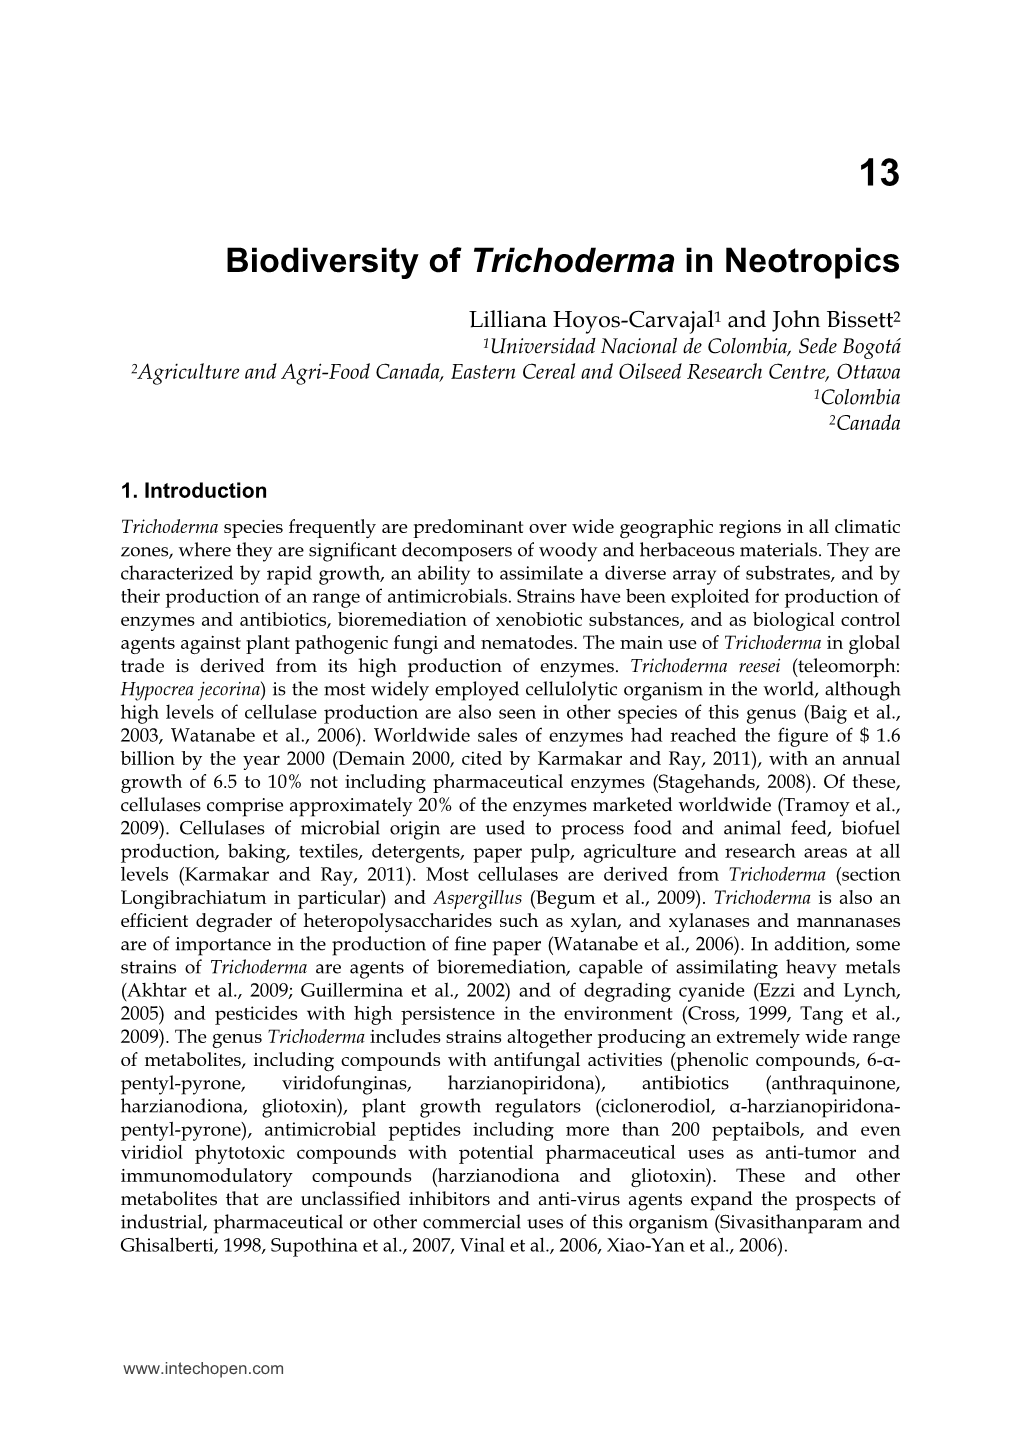 Biodiversity of Trichoderma in Neotropics